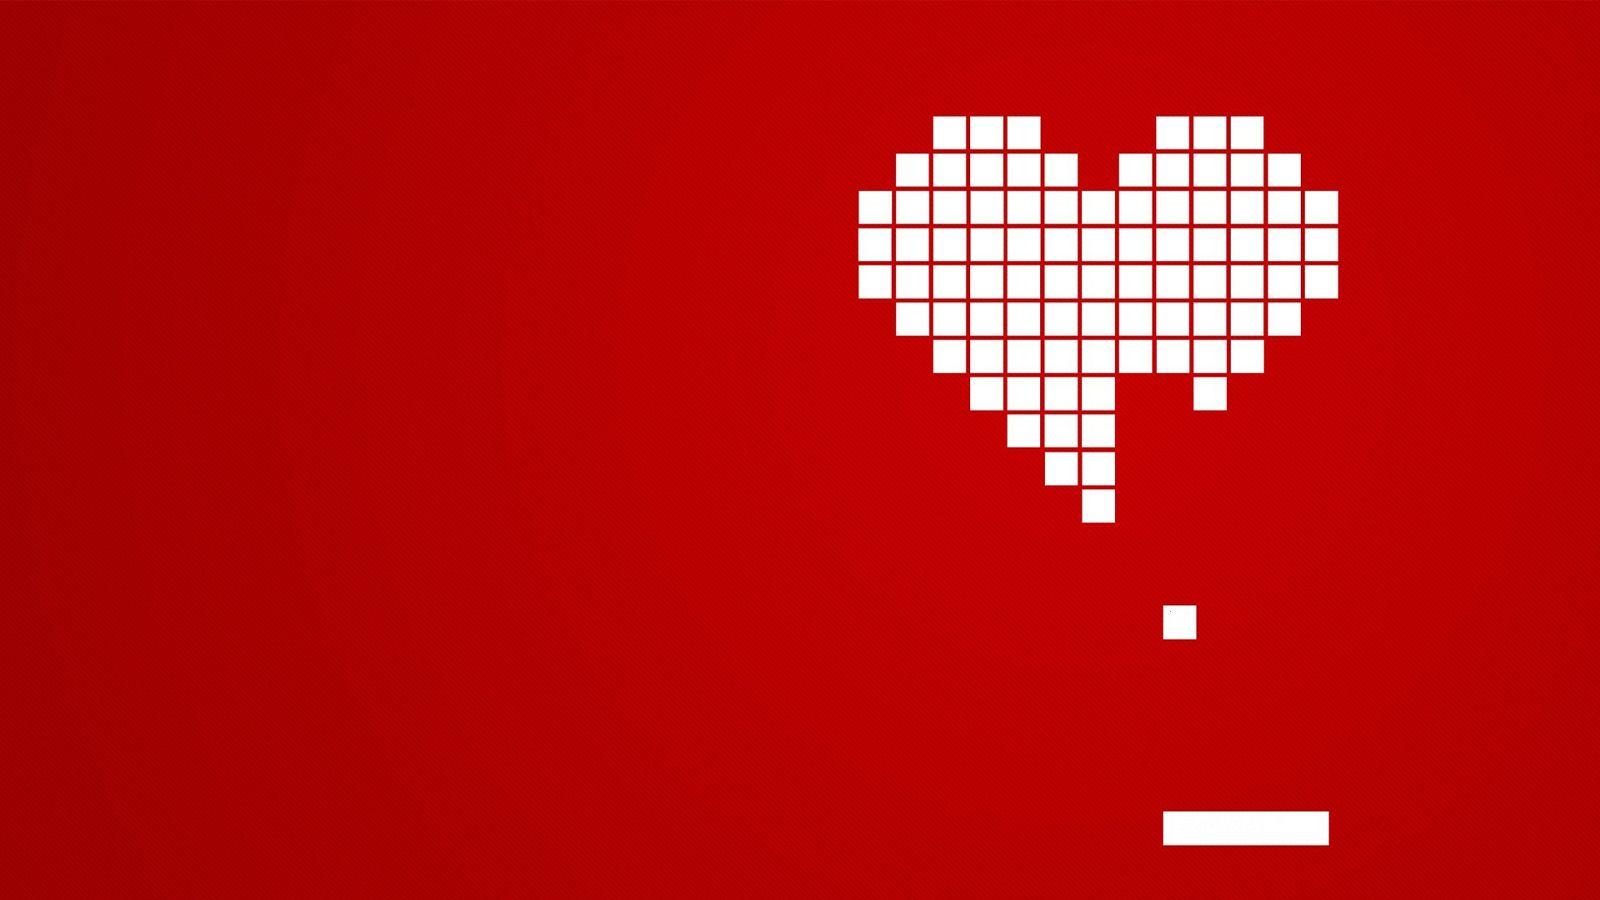 Retro desktop wallpaper pixel heart Pong style. For my beautiful